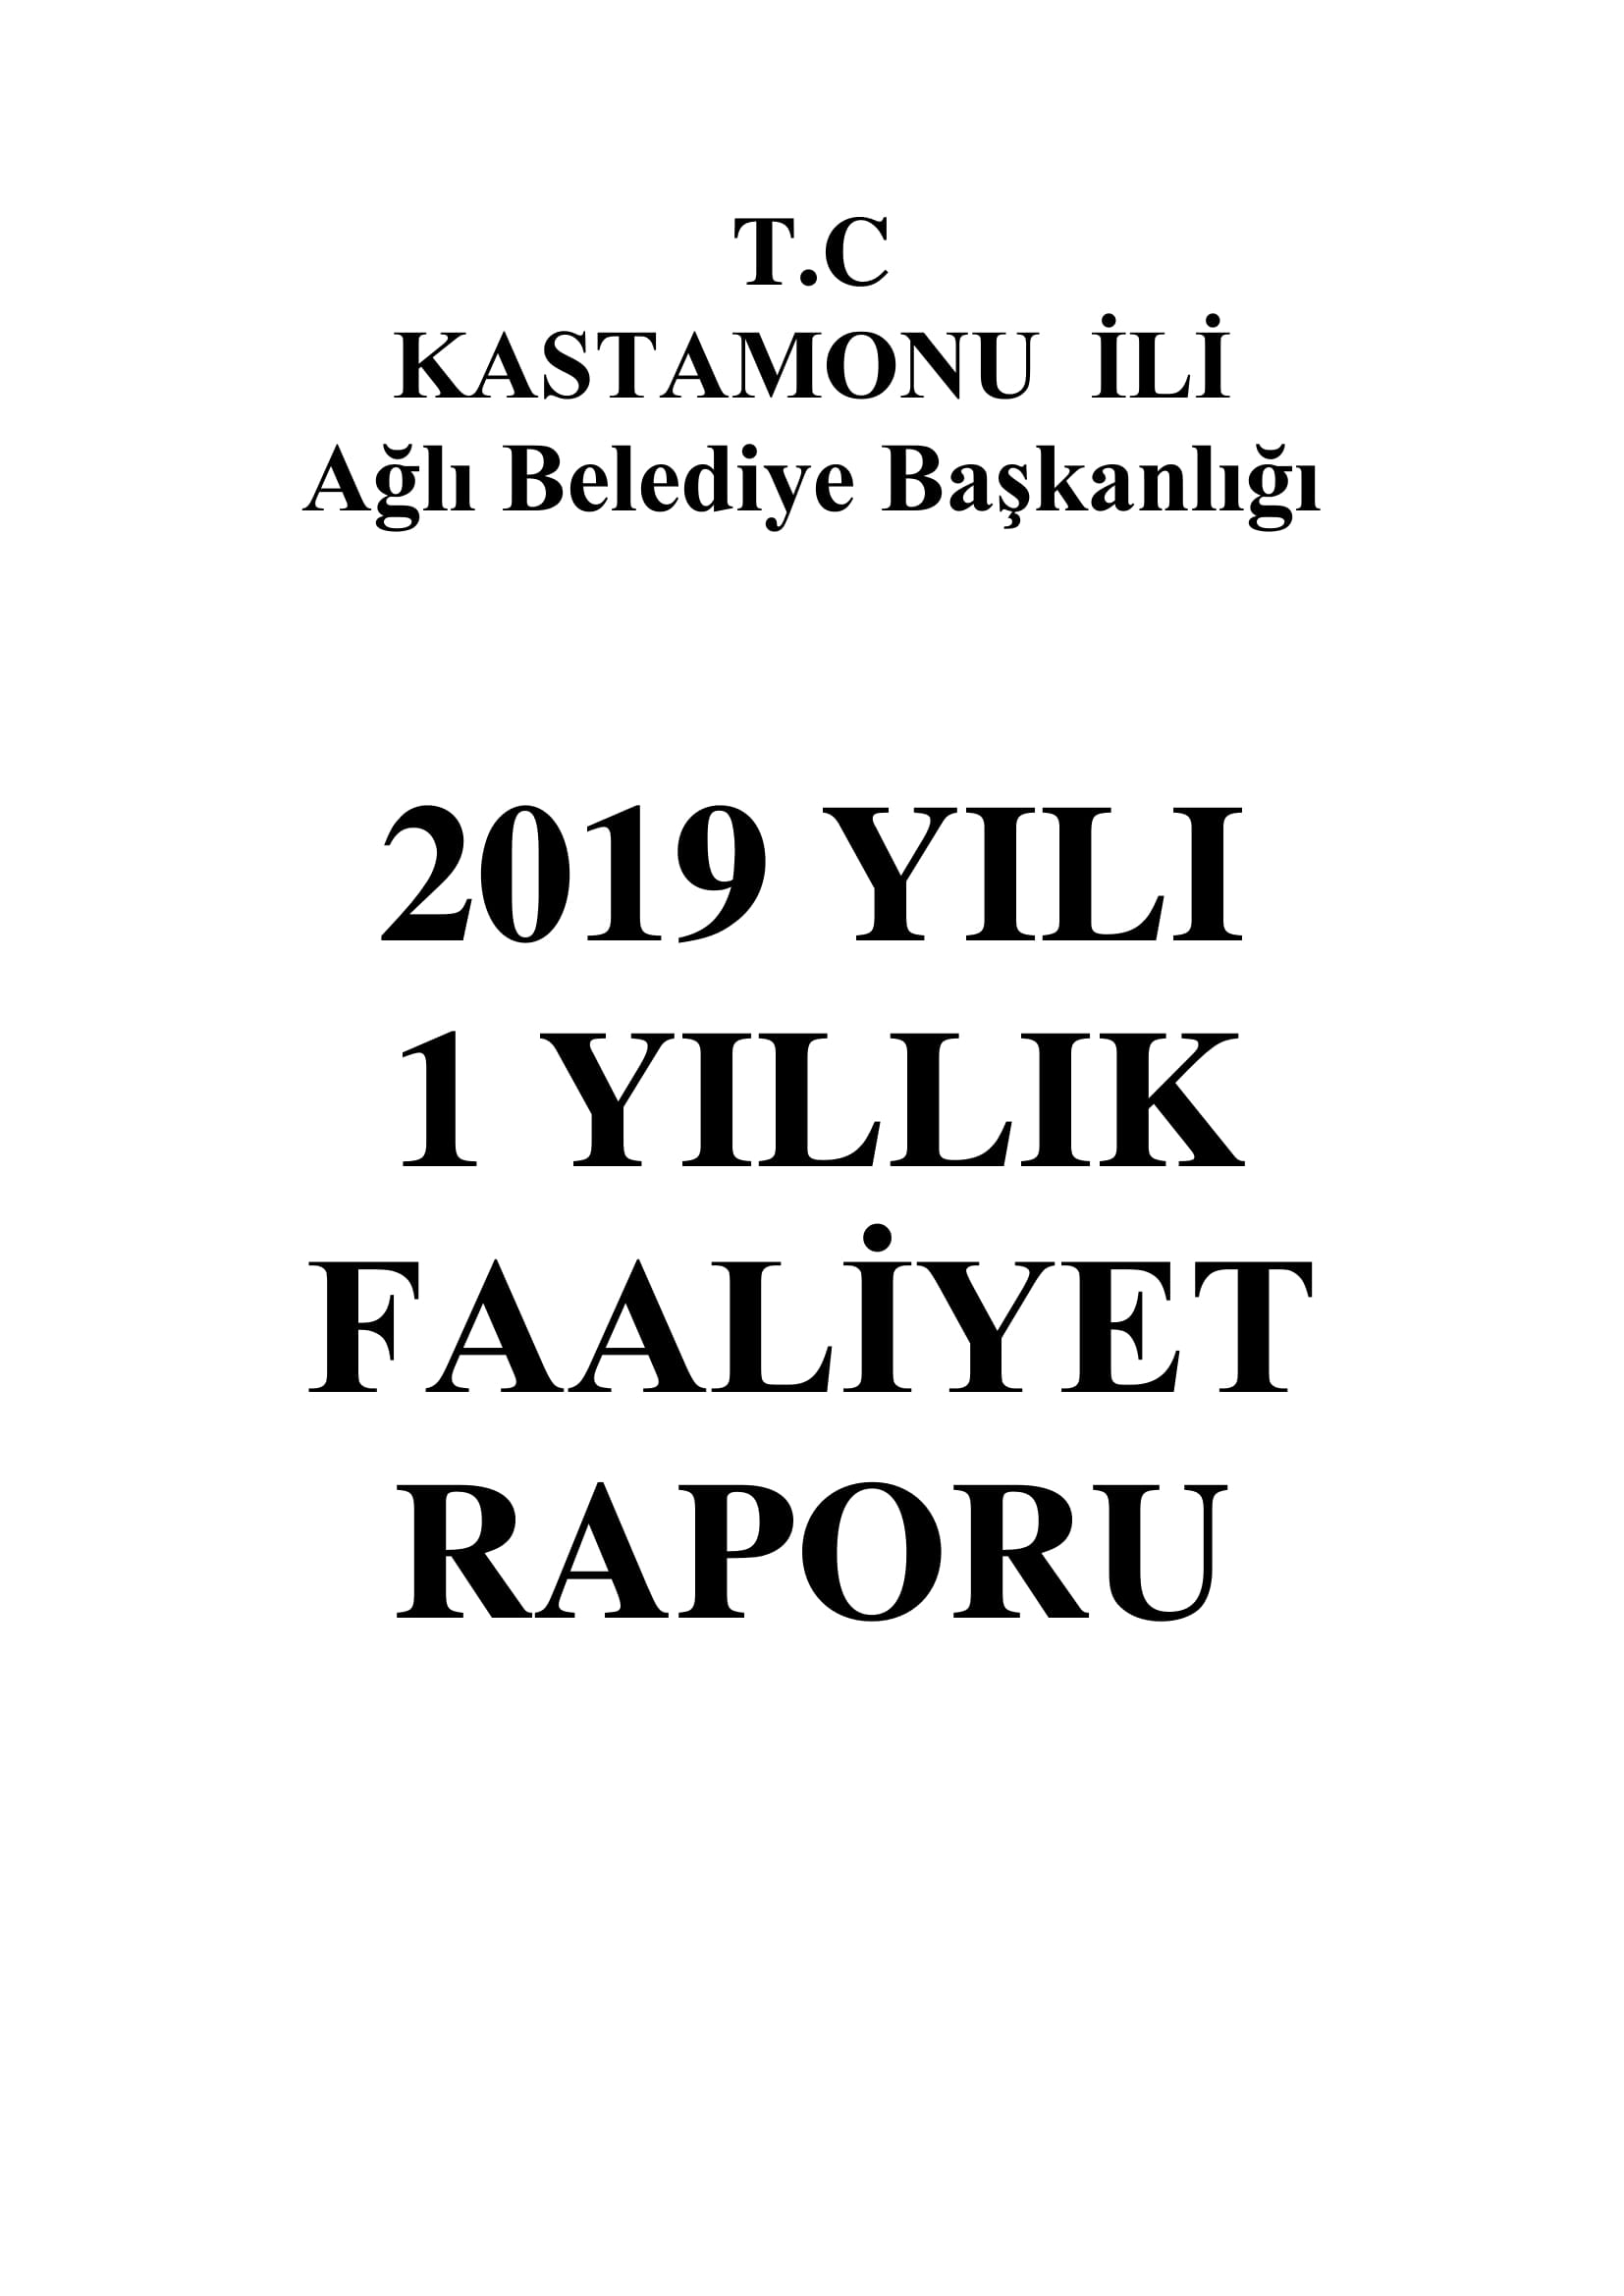 2019 Yılı Faaliyet Raporu